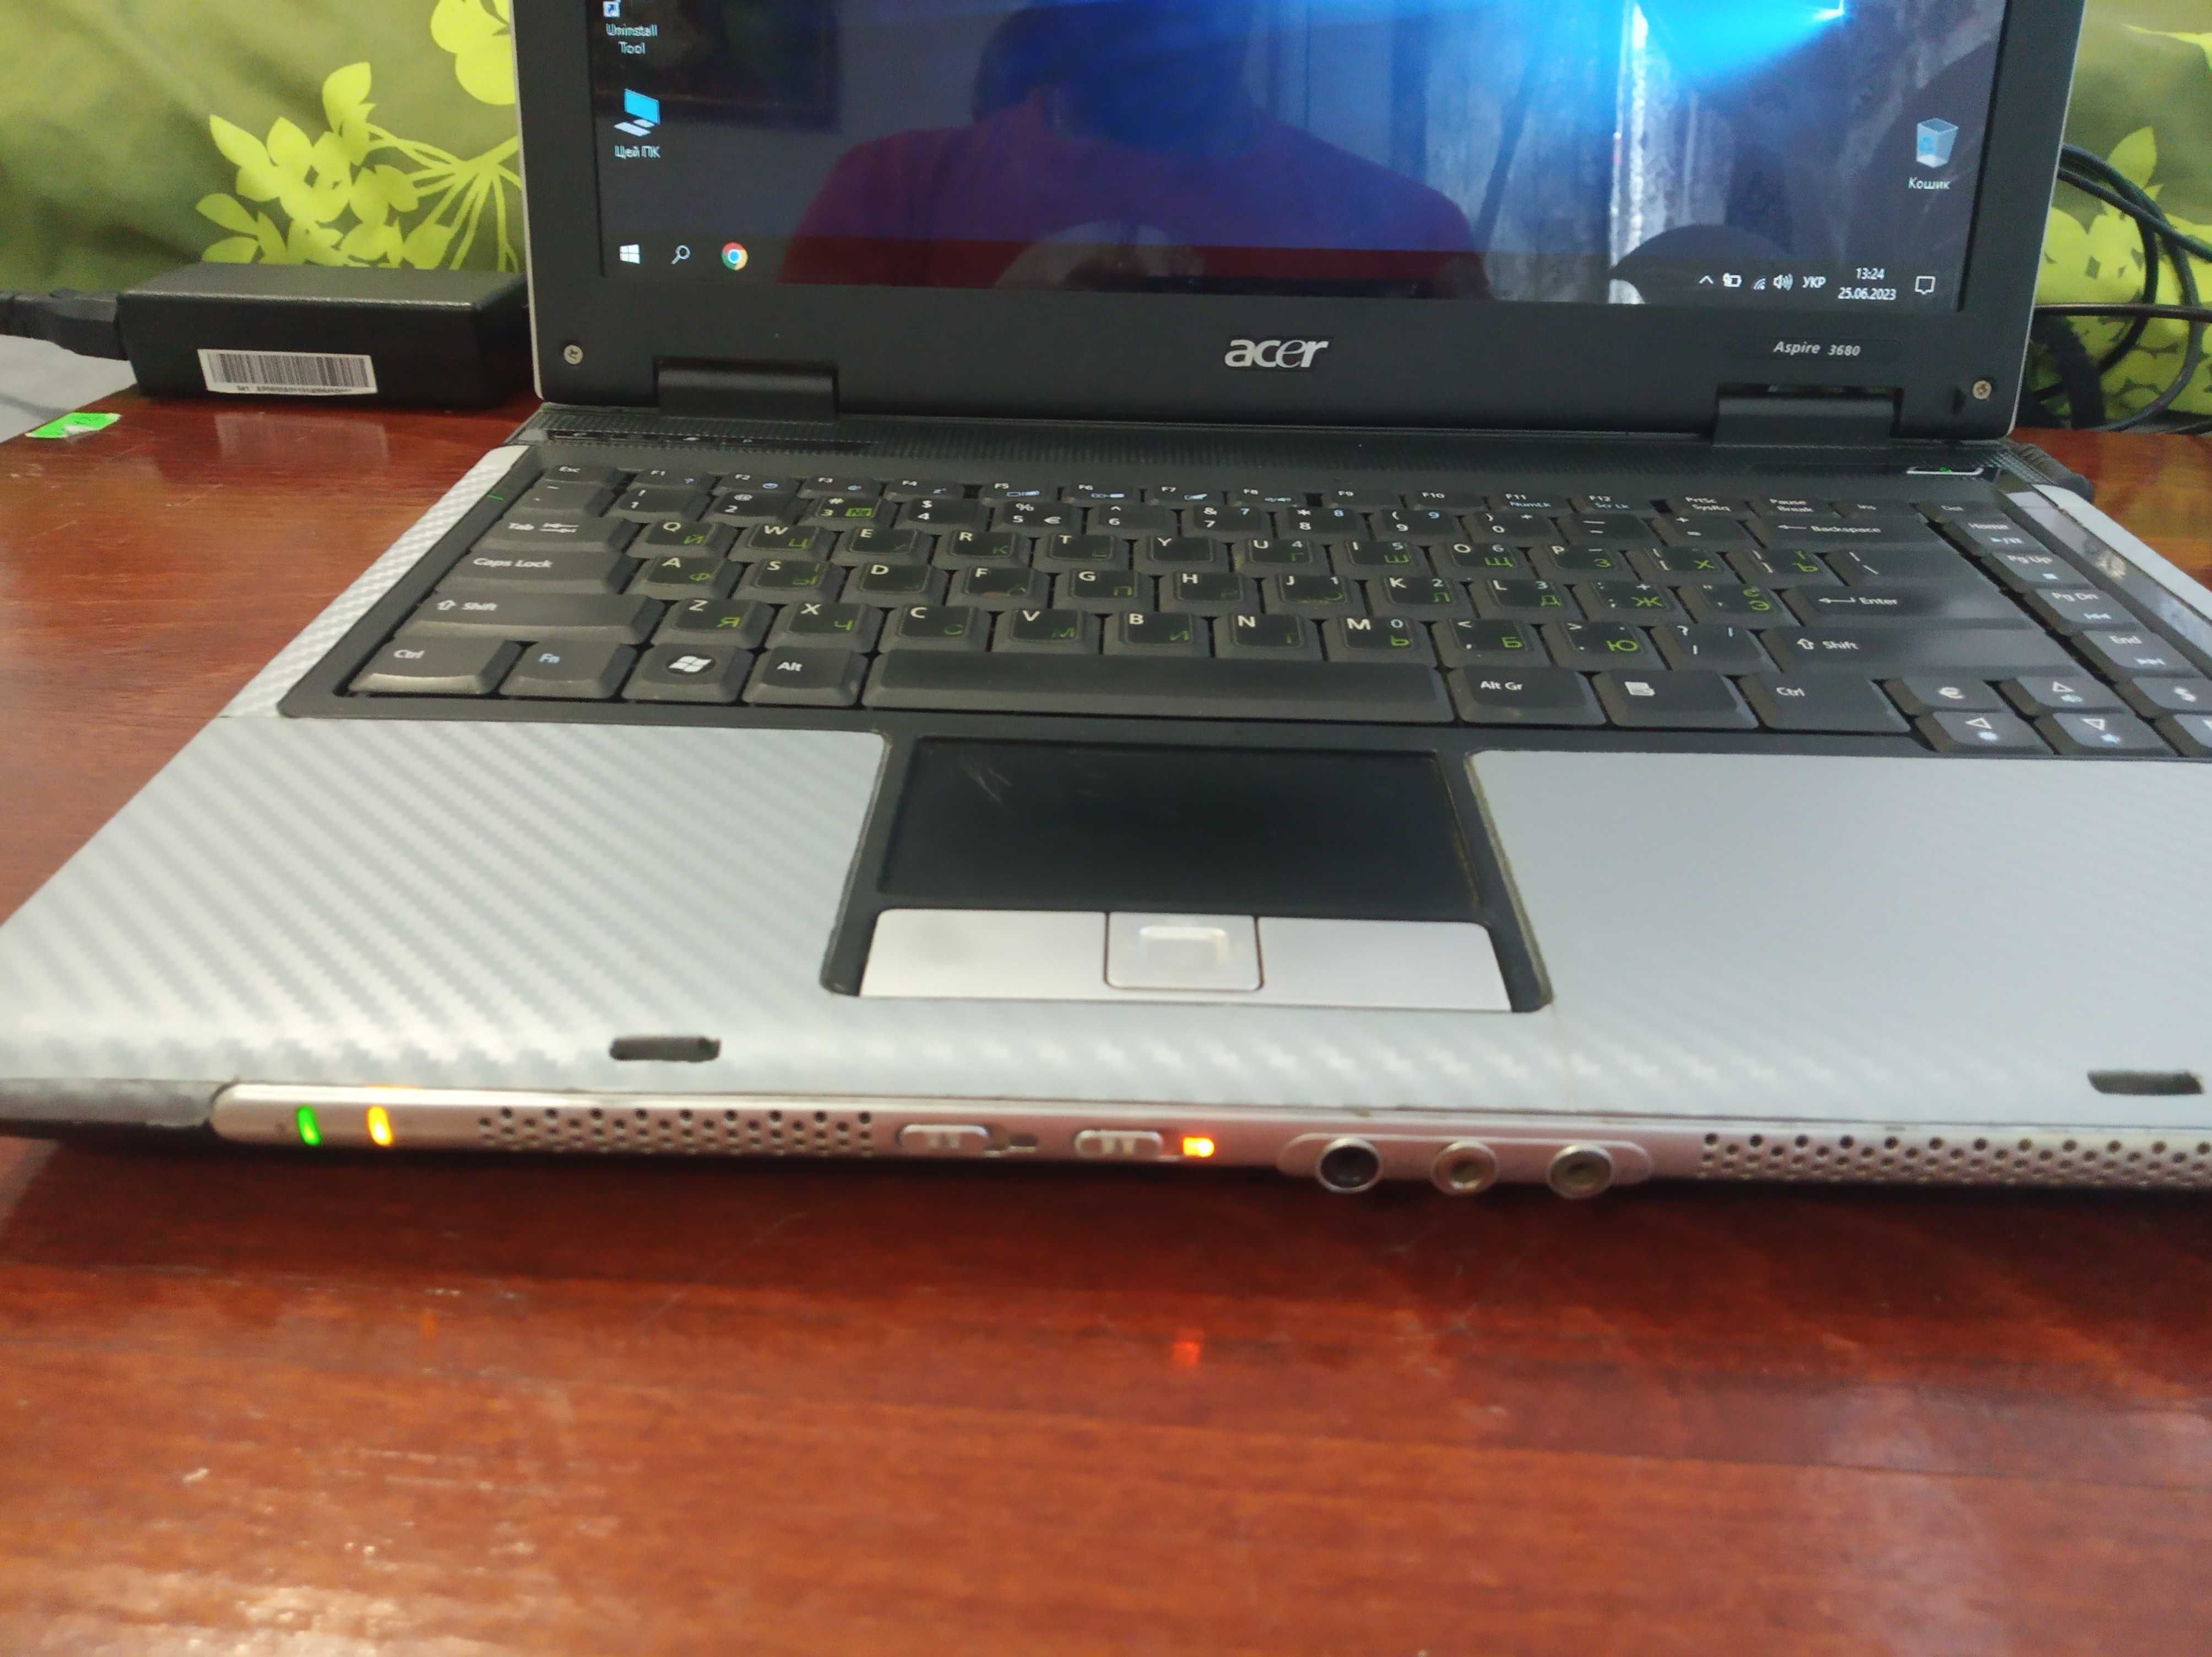 Продам ноутбук Acer aspire 3680, Intel Core 2 Duo T7200 2.00GHz